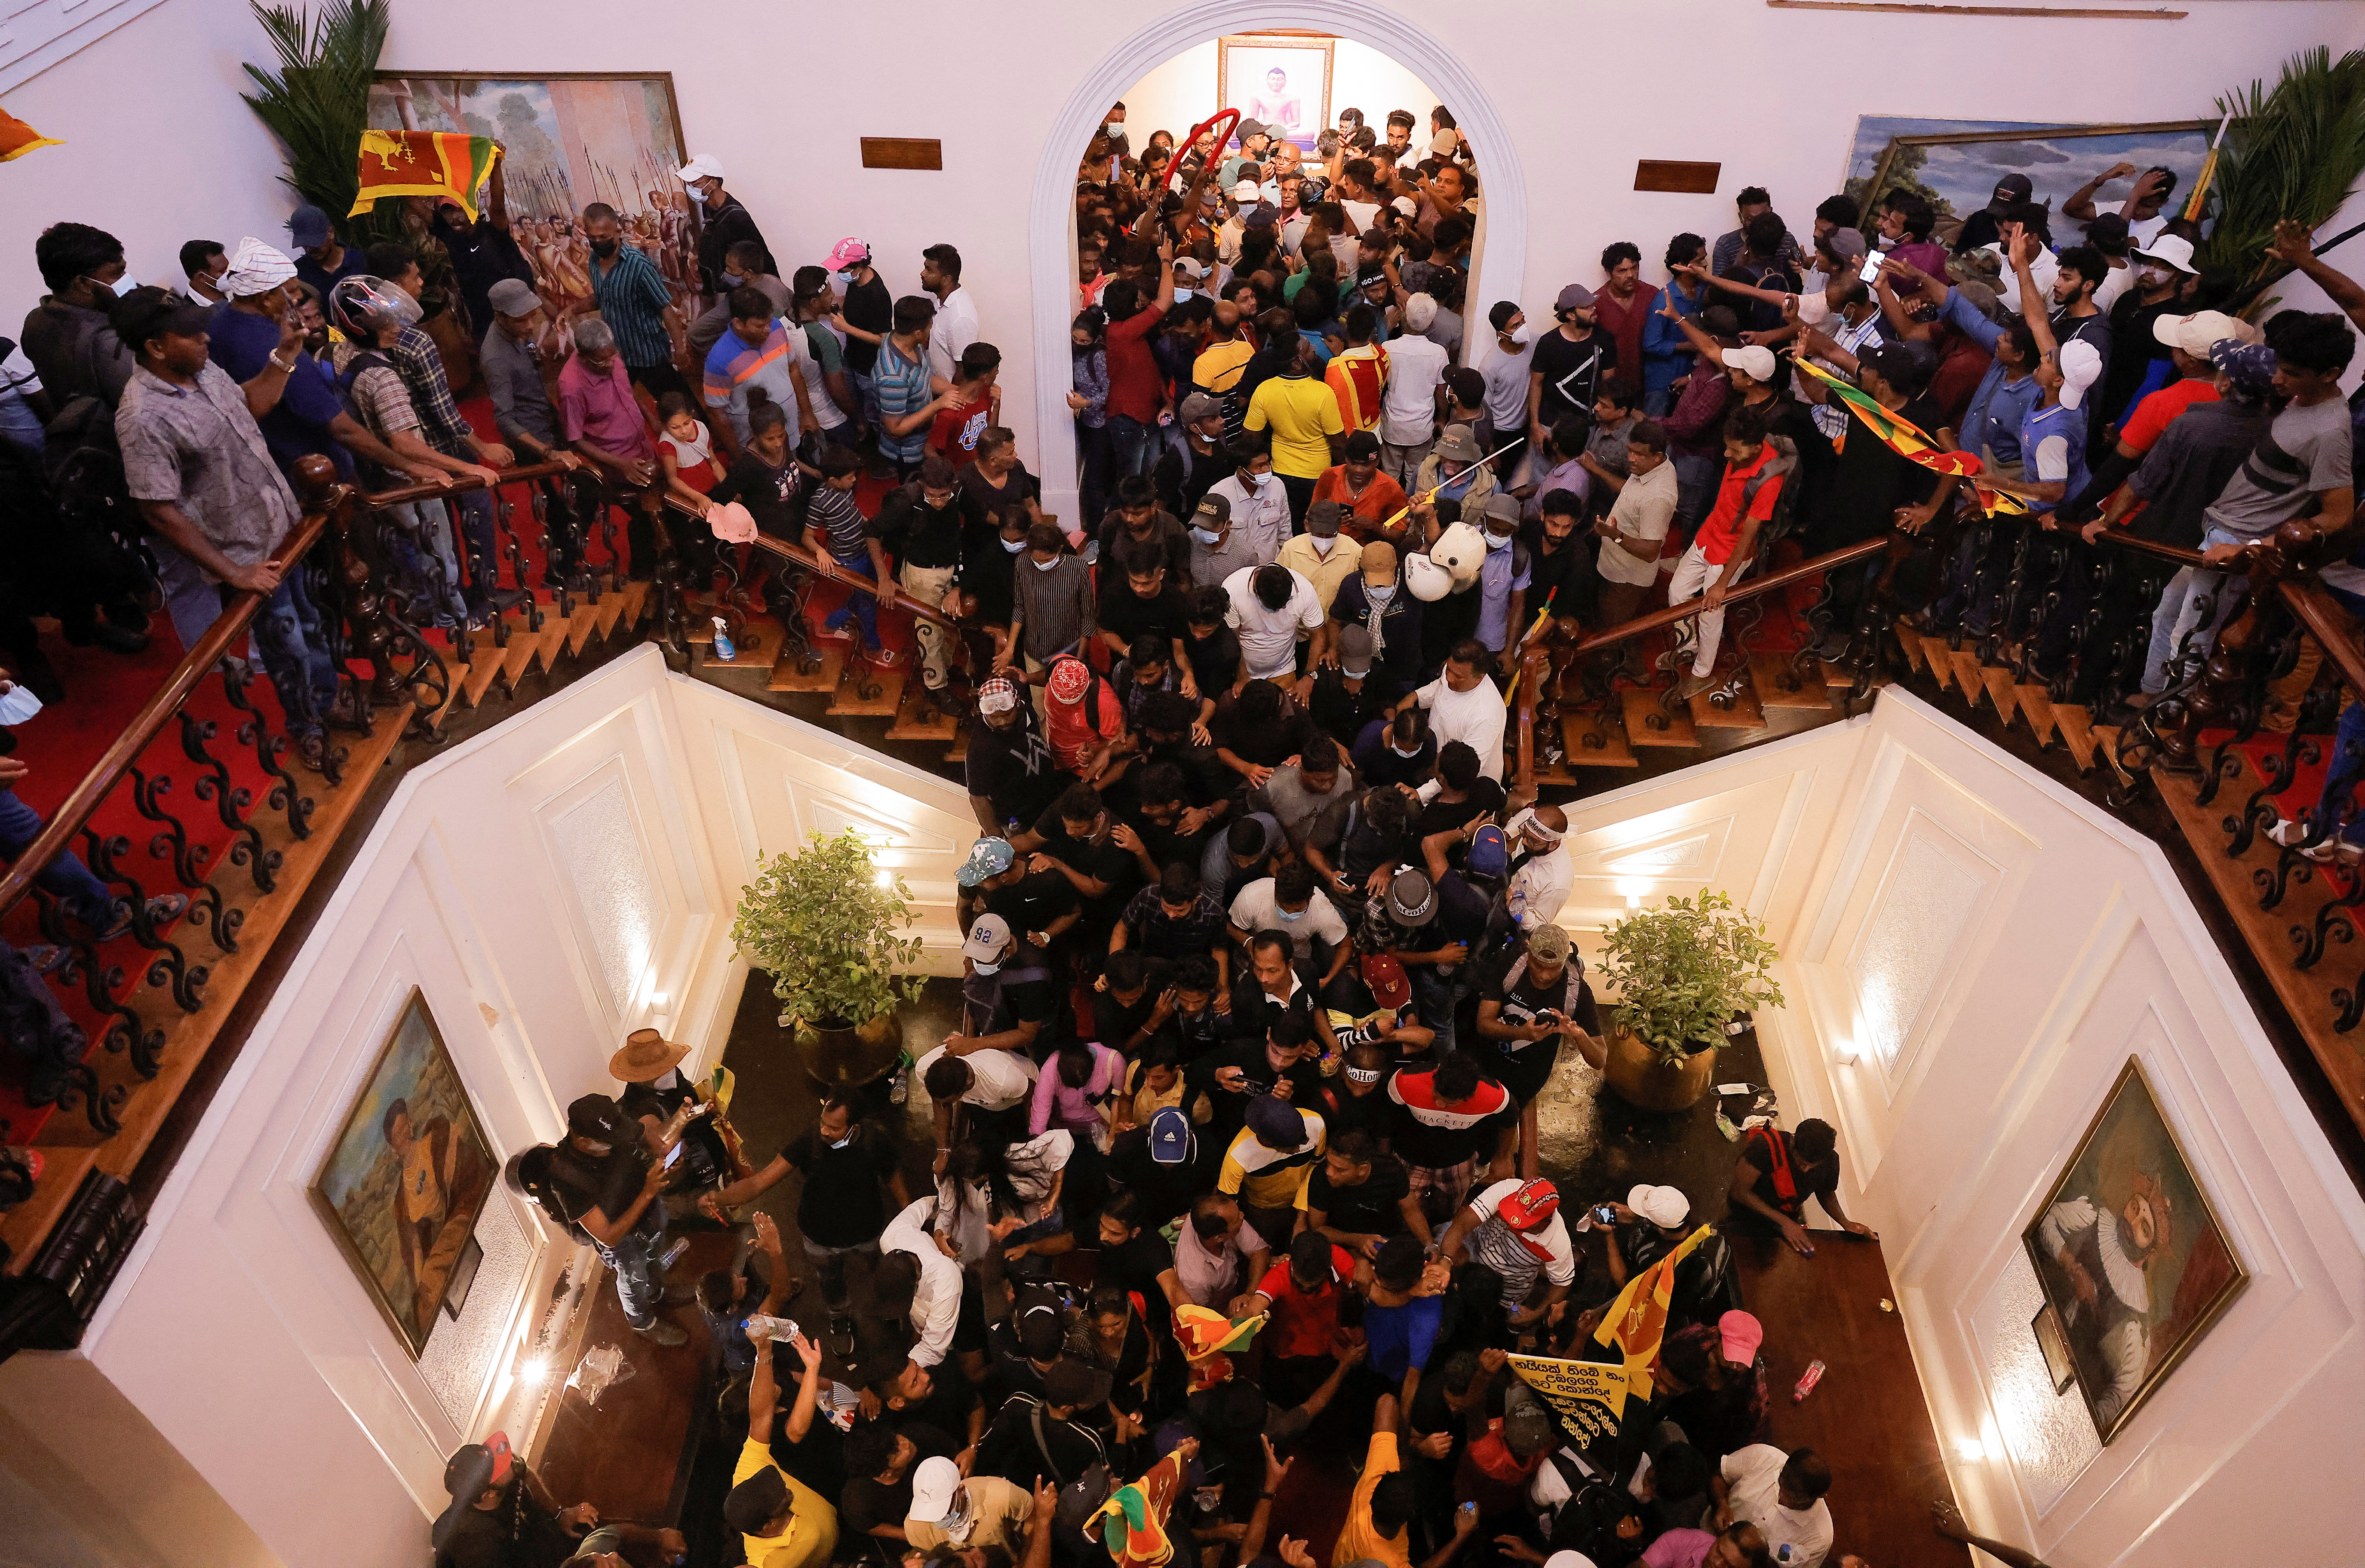 Demonstrators protest inside the President's House premises, after President Gotabaya Rajapaksa fled, amid the country's economic crisis, in Colombo, Sri Lanka July 9, 2022. REUTERS/Dinuka Liyanawatte